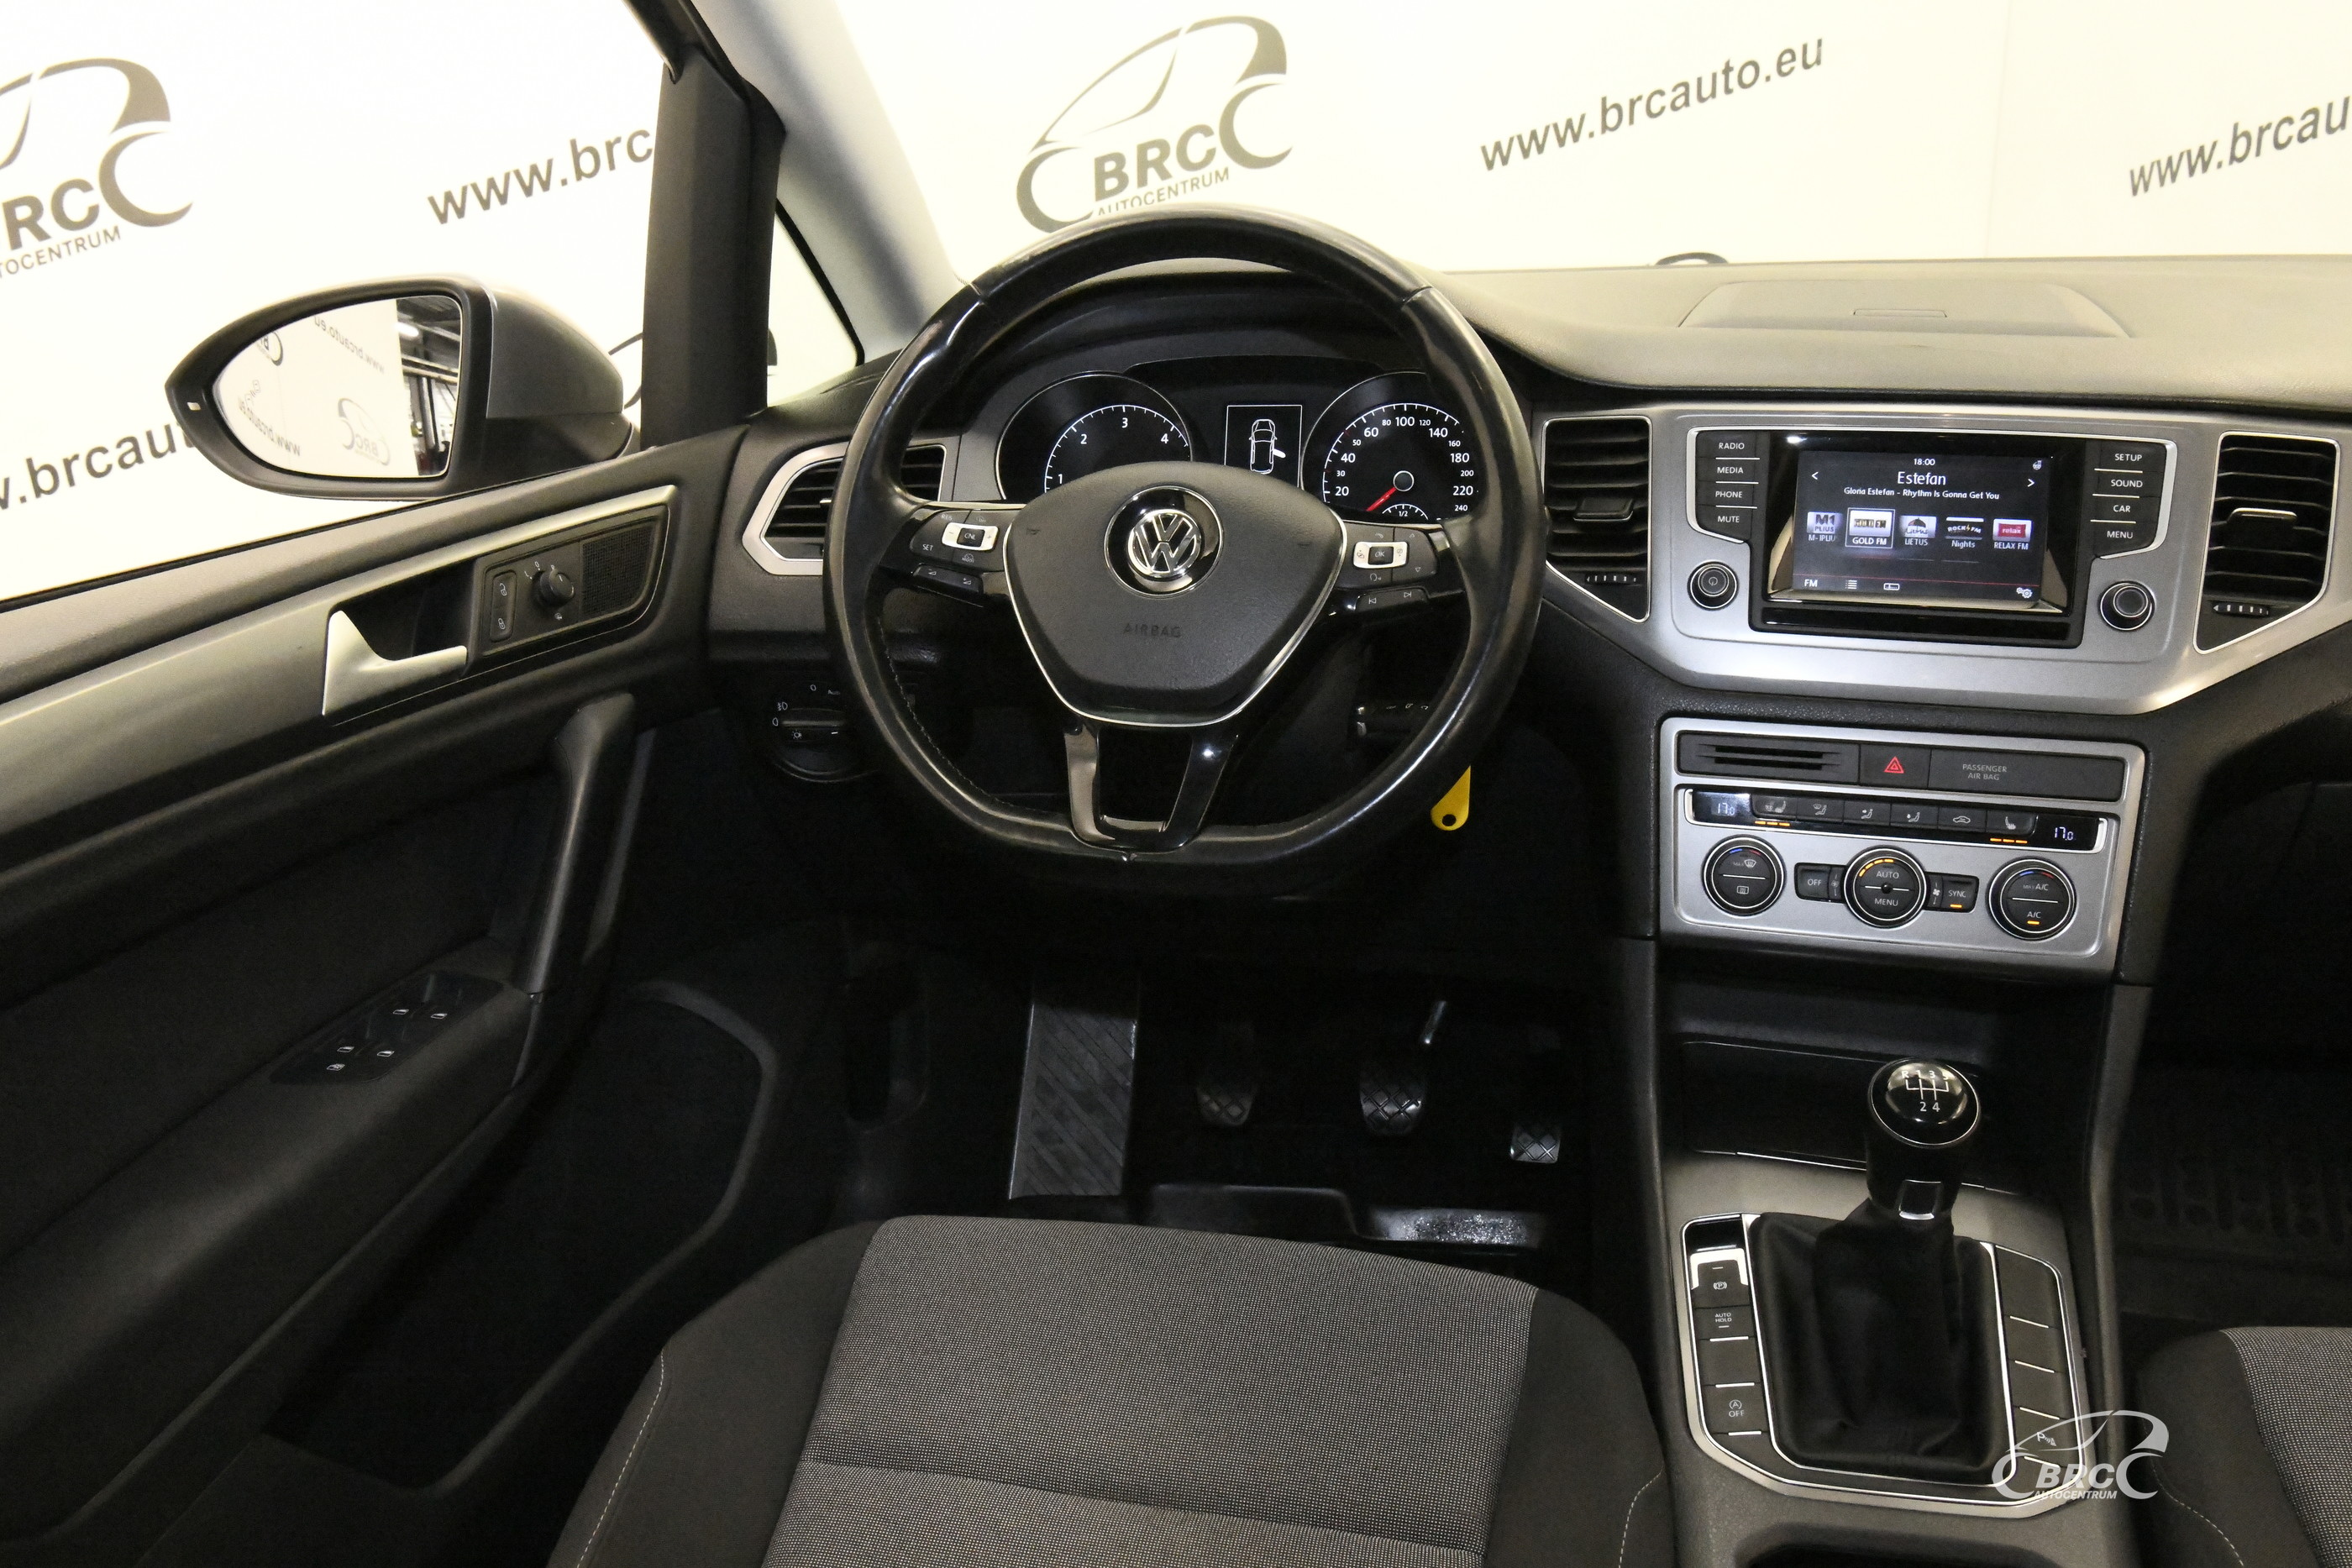 Volkswagen Golf Sportsvan 1.6 TDI